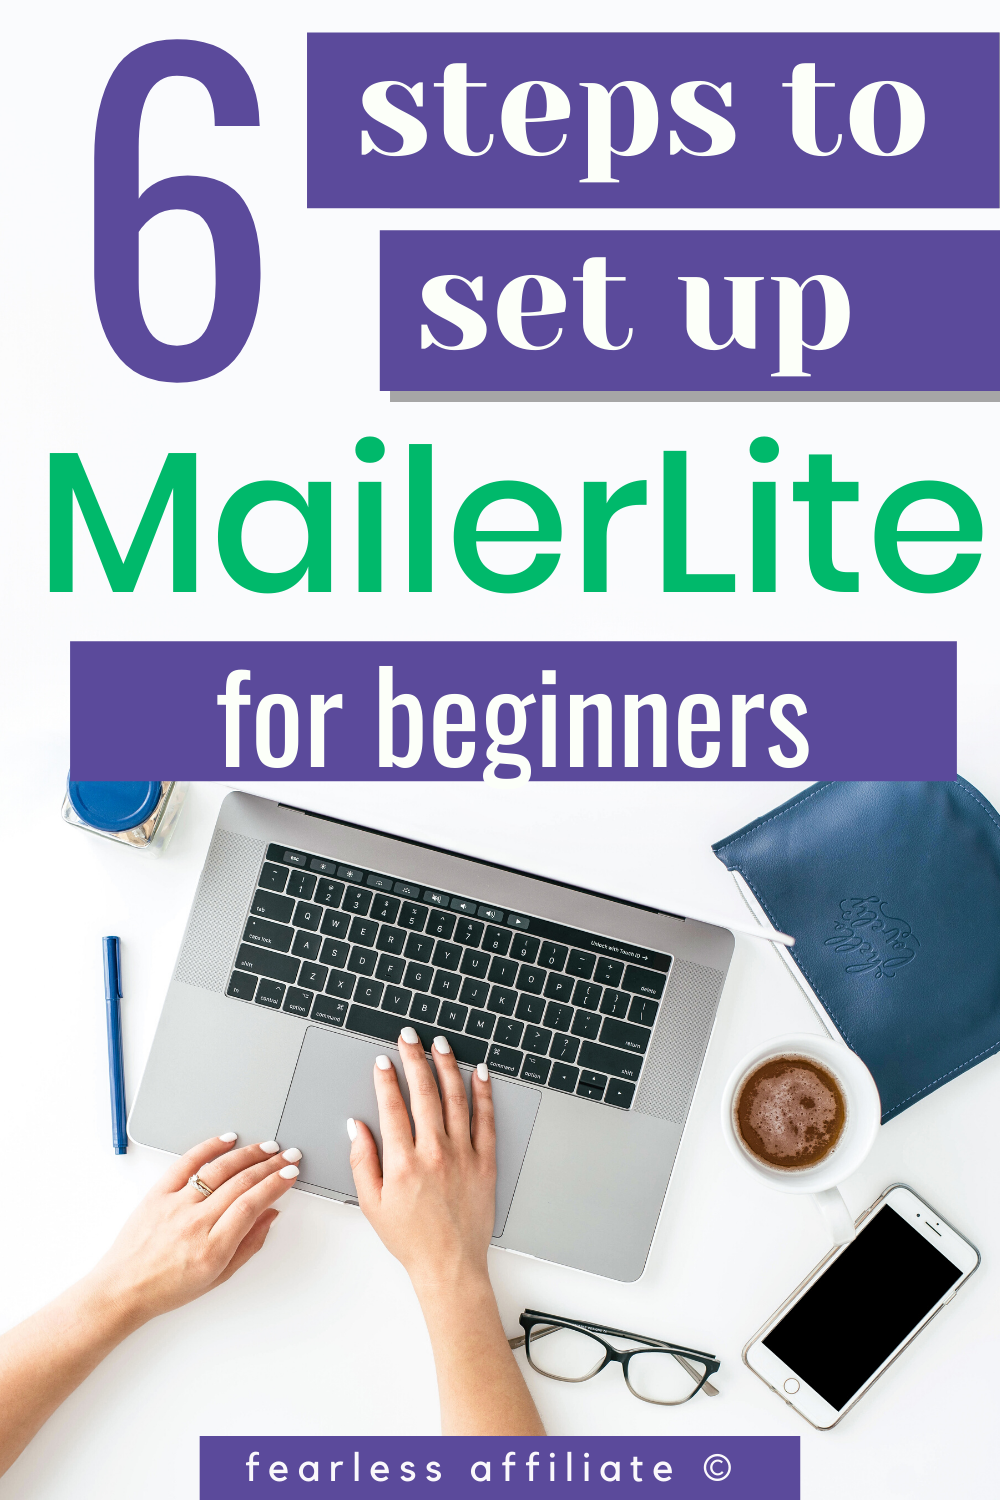 MailerLite Tutorial: How To Use MailerLite today